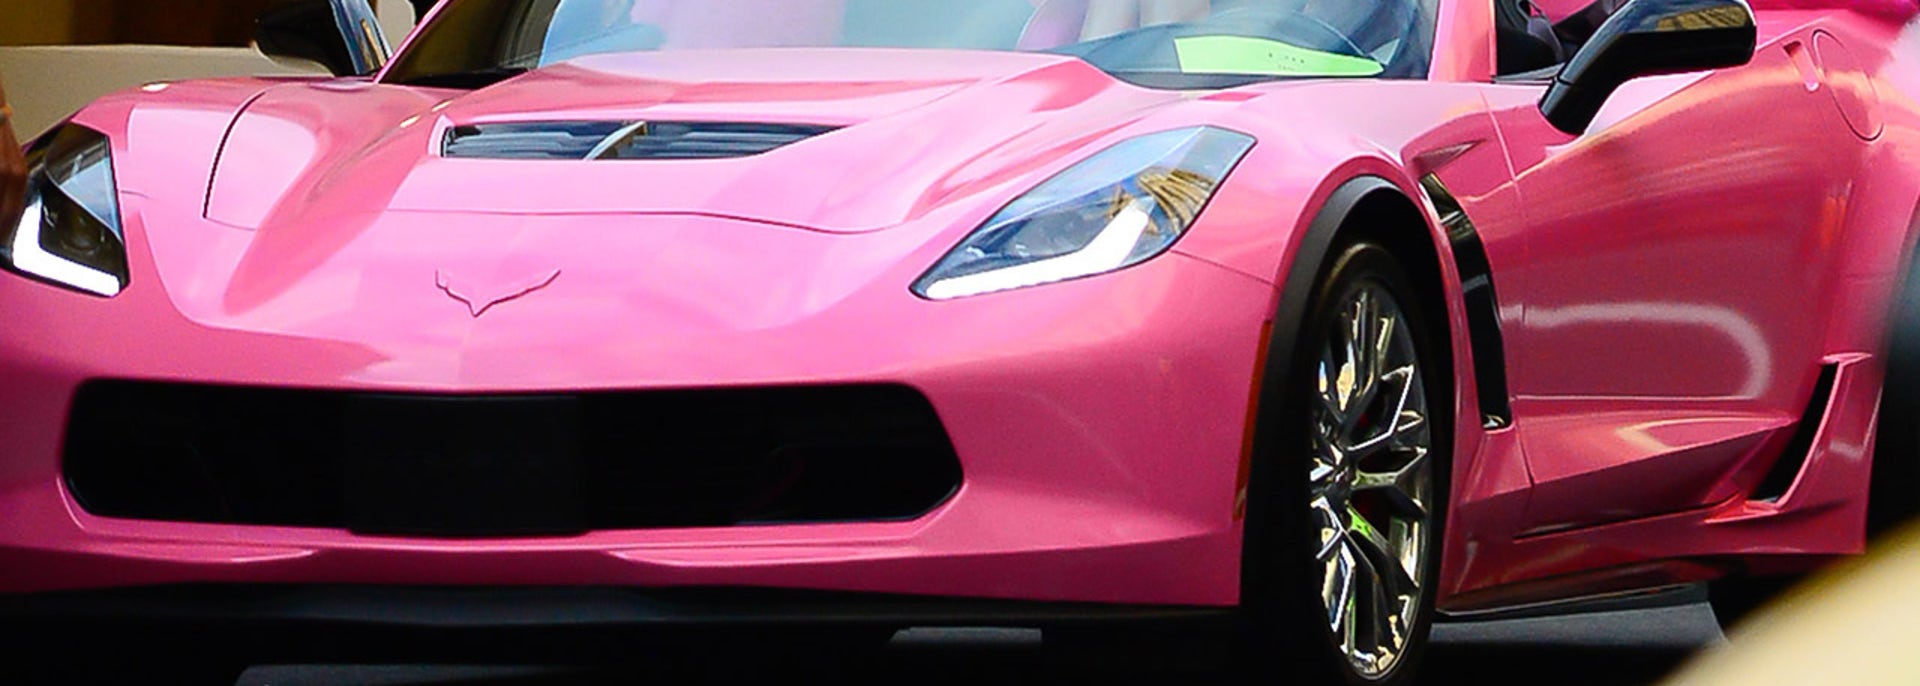 barbie pink corvette convertible car